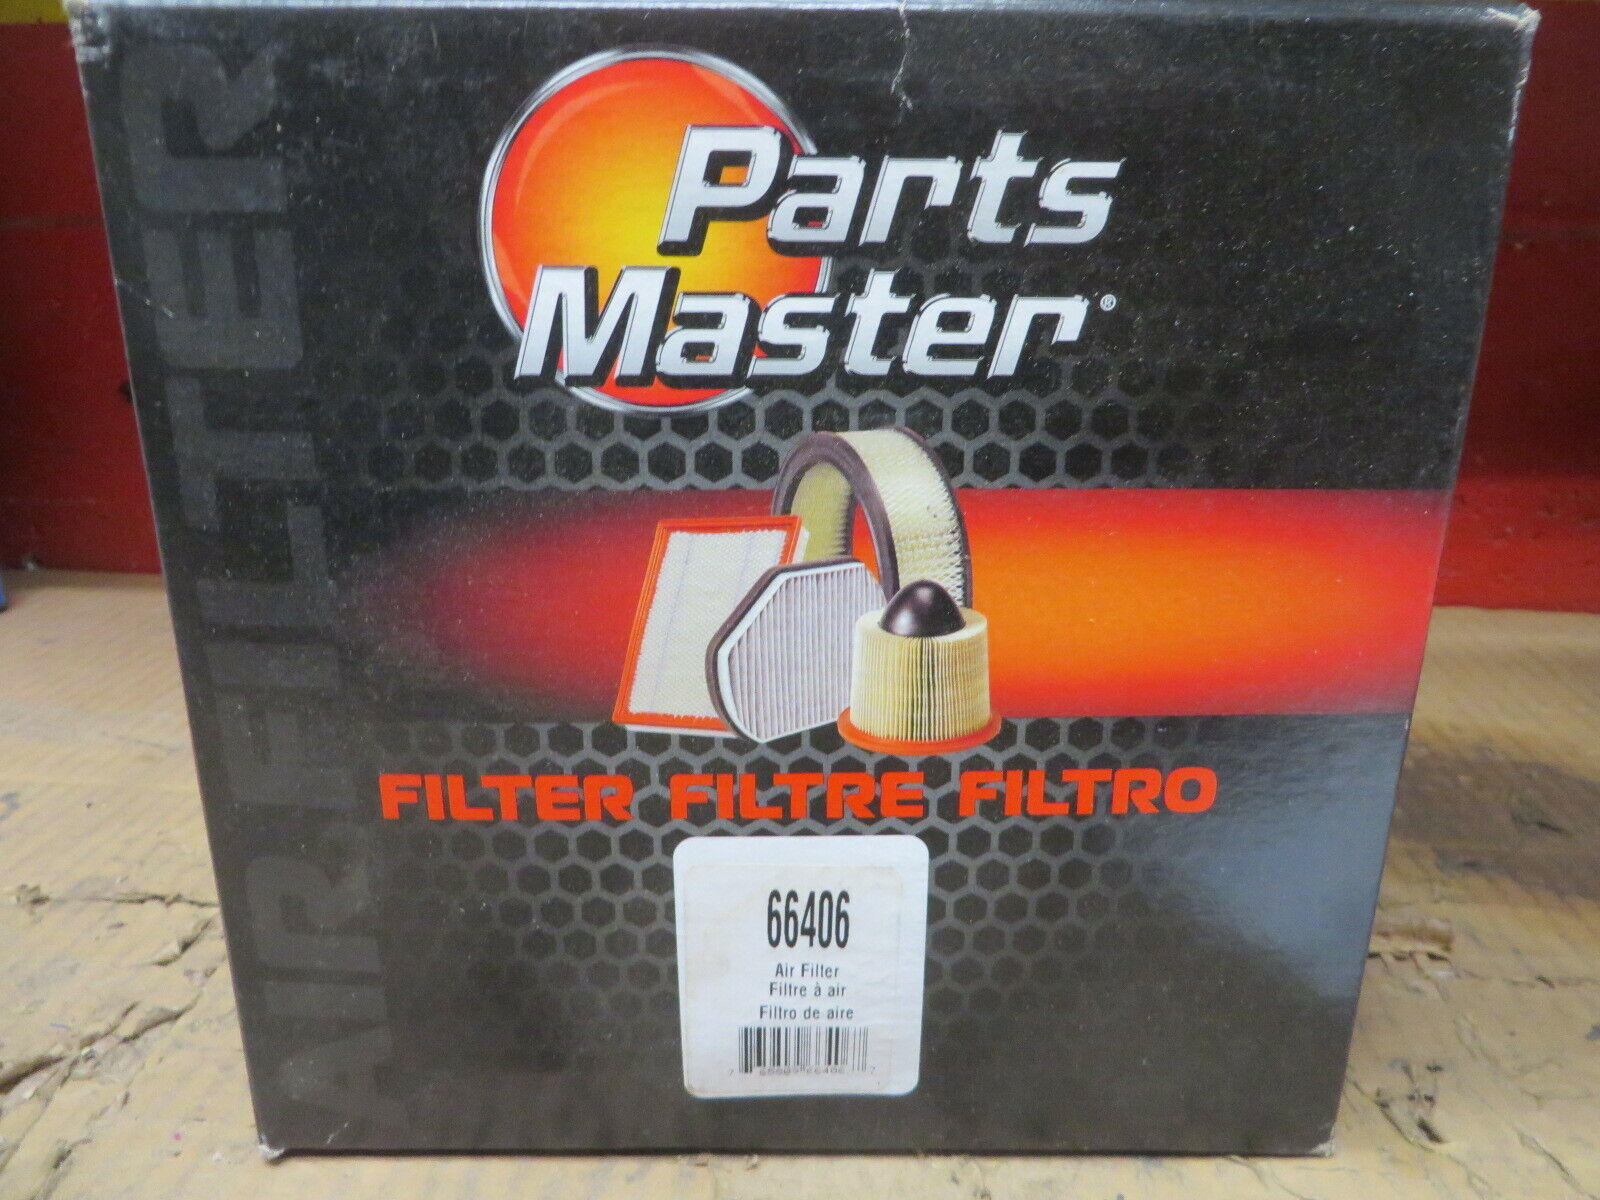 AIR FILTER Parts Master # 66046 NEW UNUSED